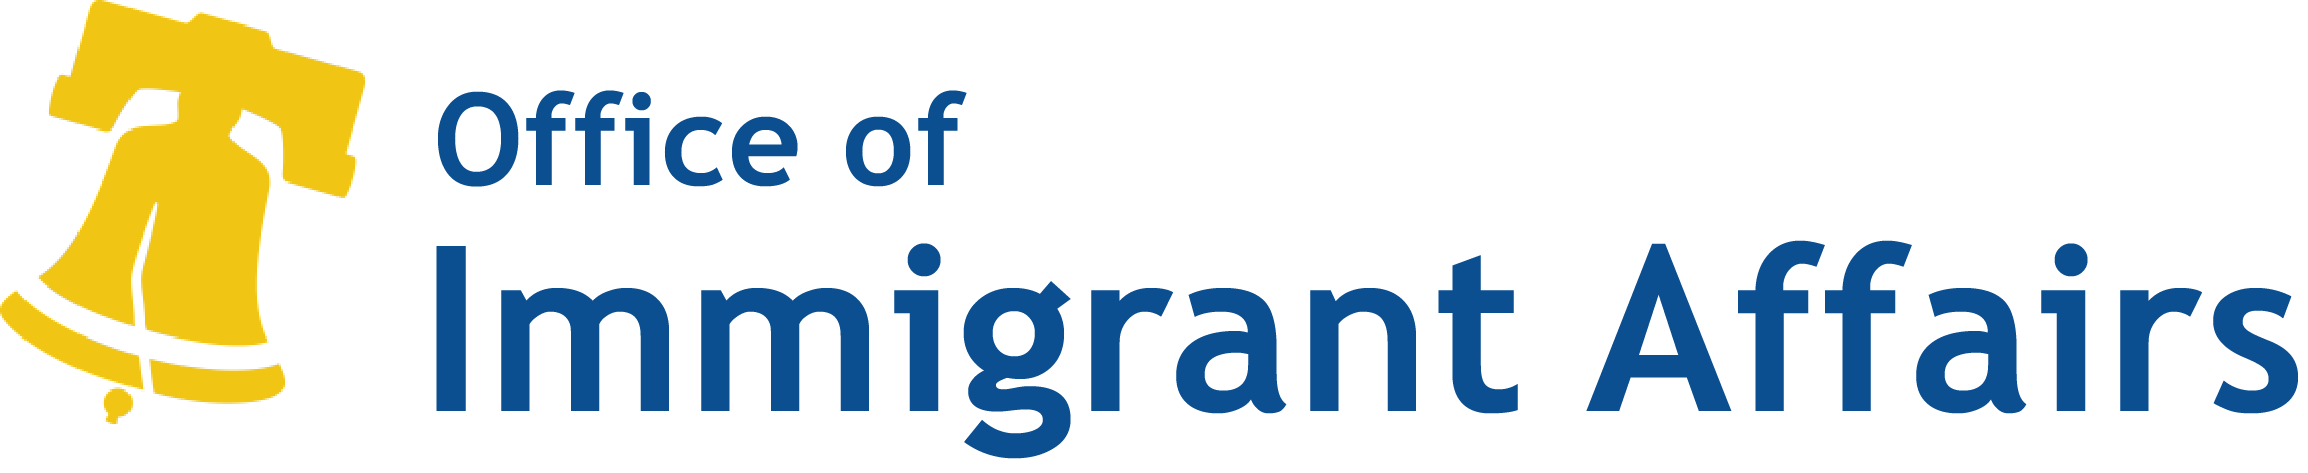 ImmigrantAffairs-Logo.png